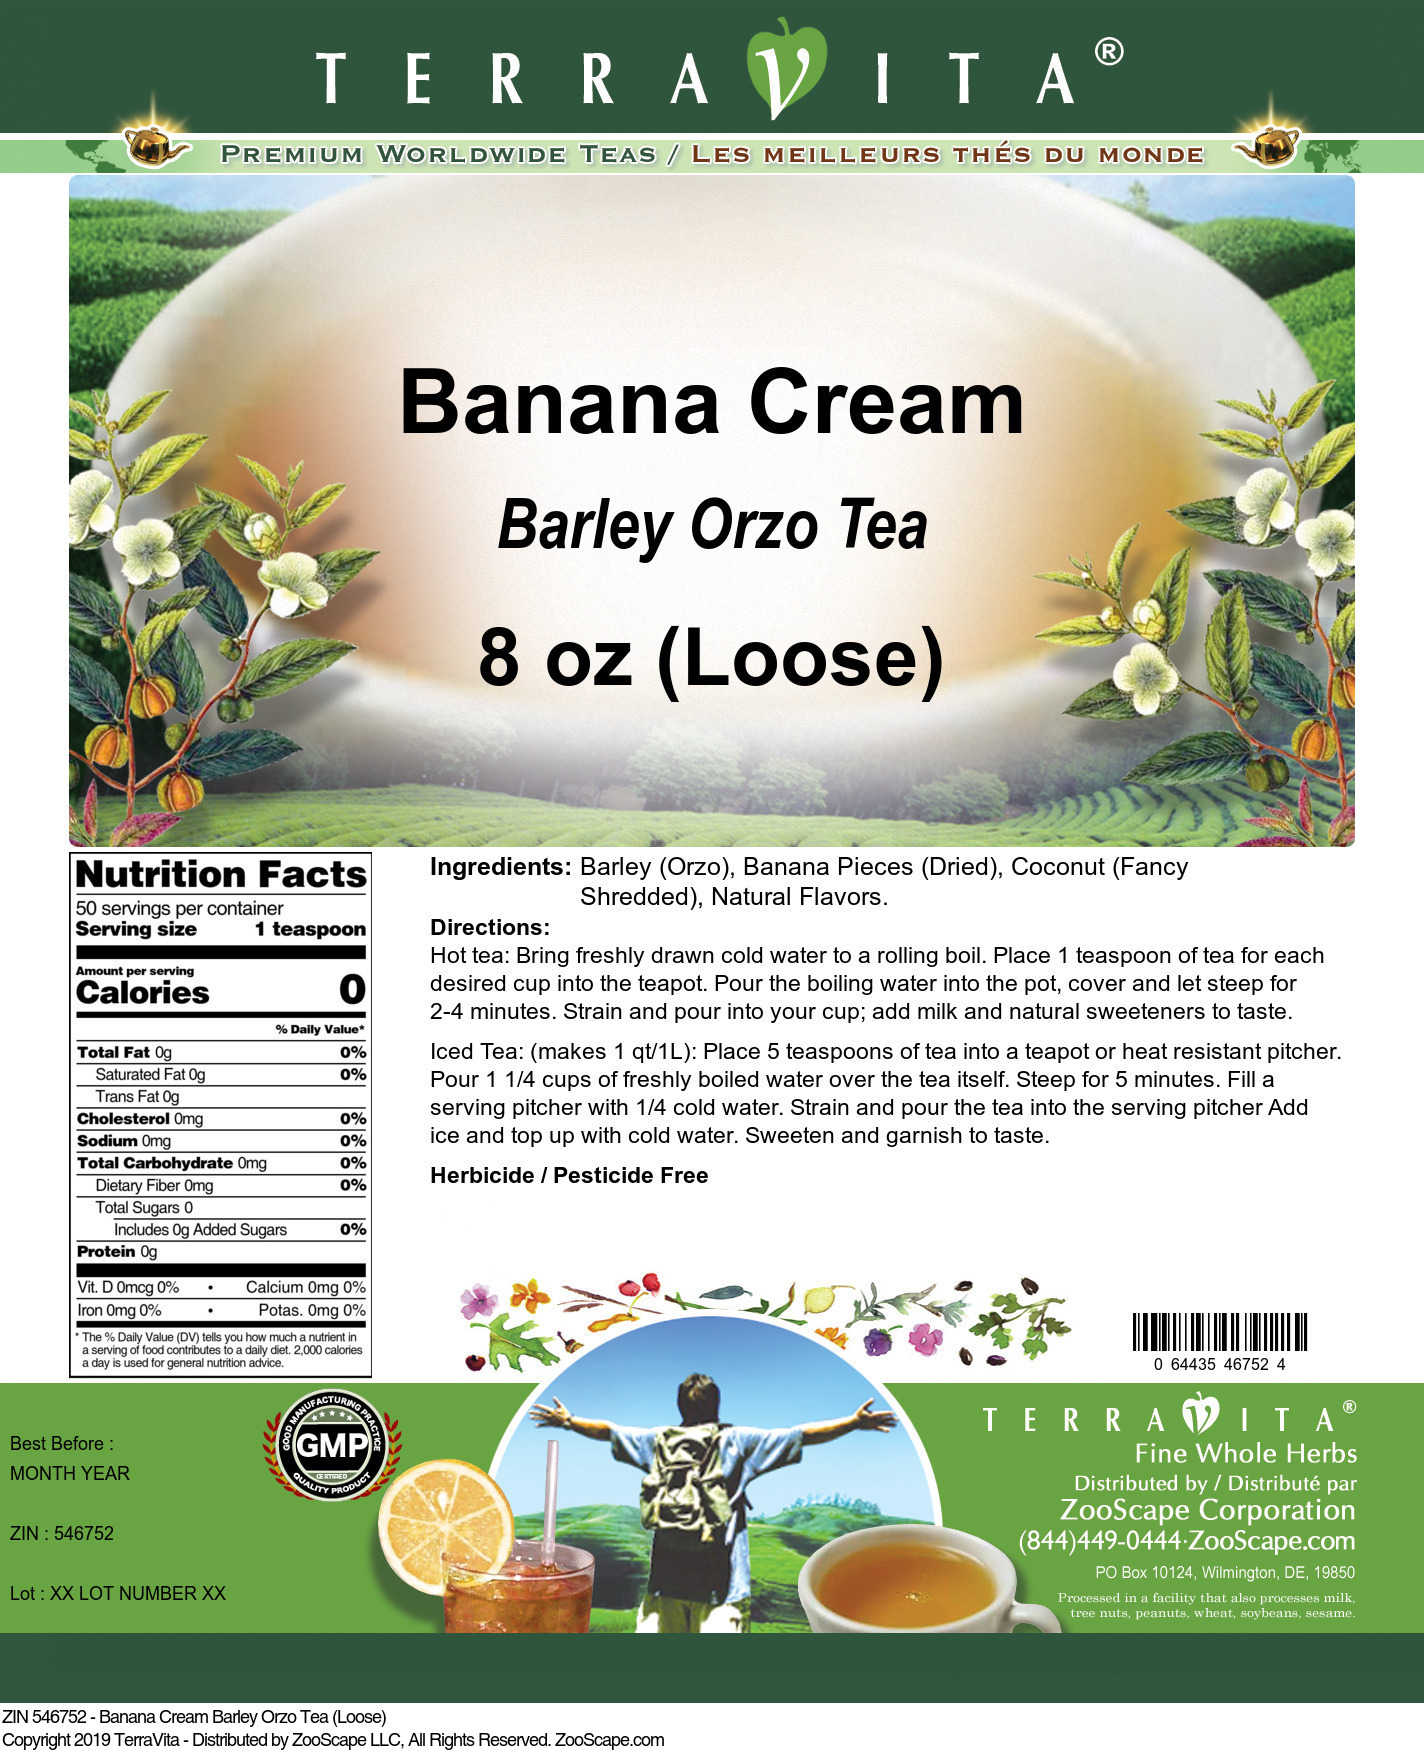 Banana Cream Barley Orzo Tea (Loose) - Label